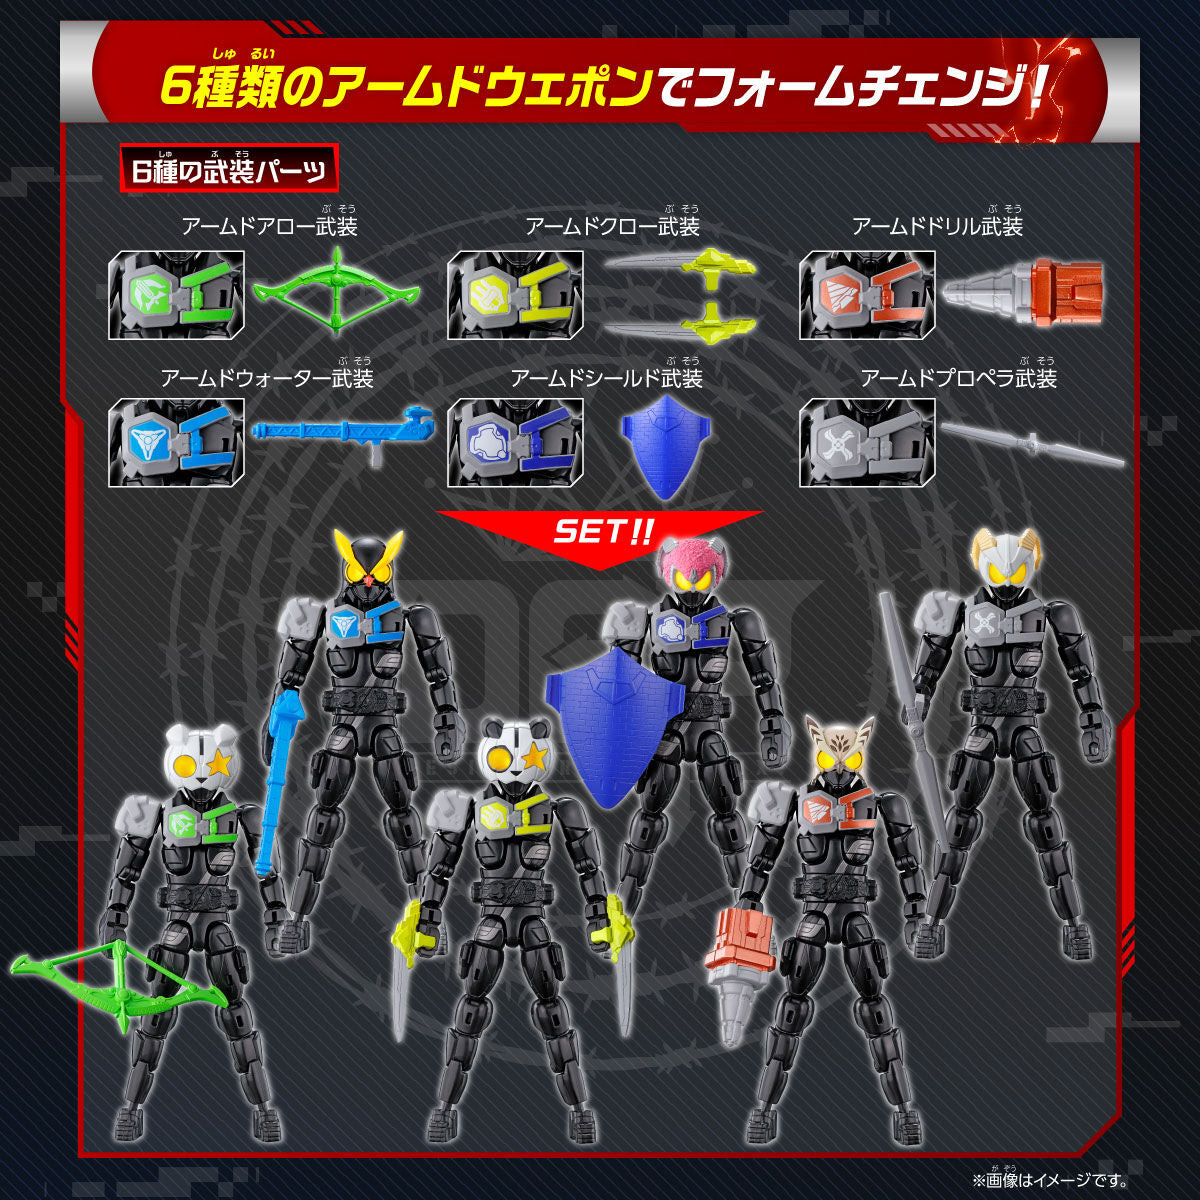 Kamen Rider Geats Revolve Change PB01 - Entry Body, Rider & Weapons Set